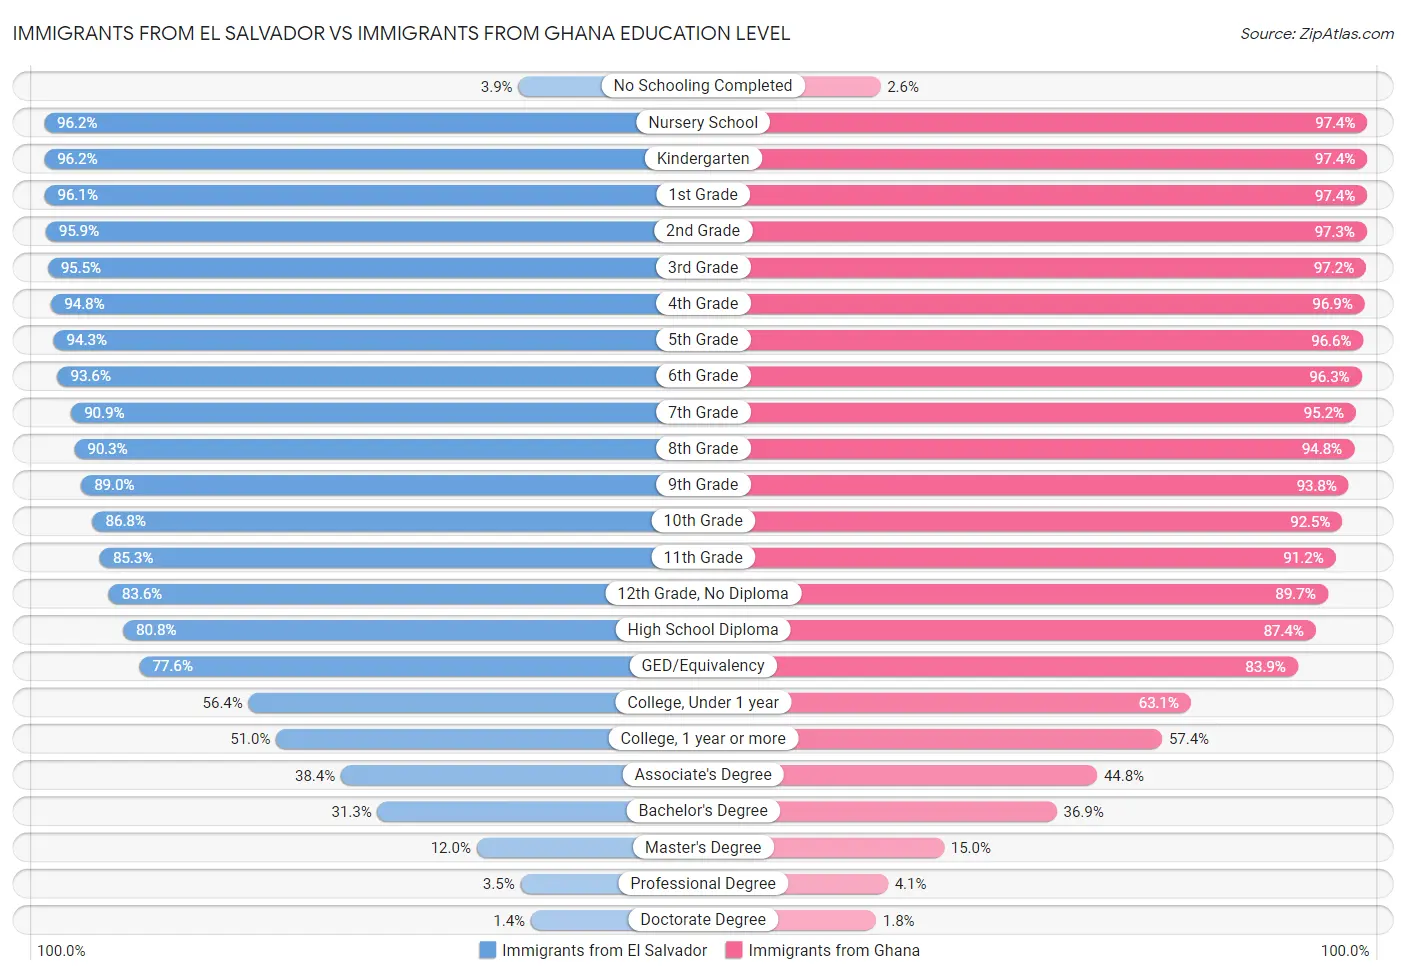 Immigrants from El Salvador vs Immigrants from Ghana Education Level